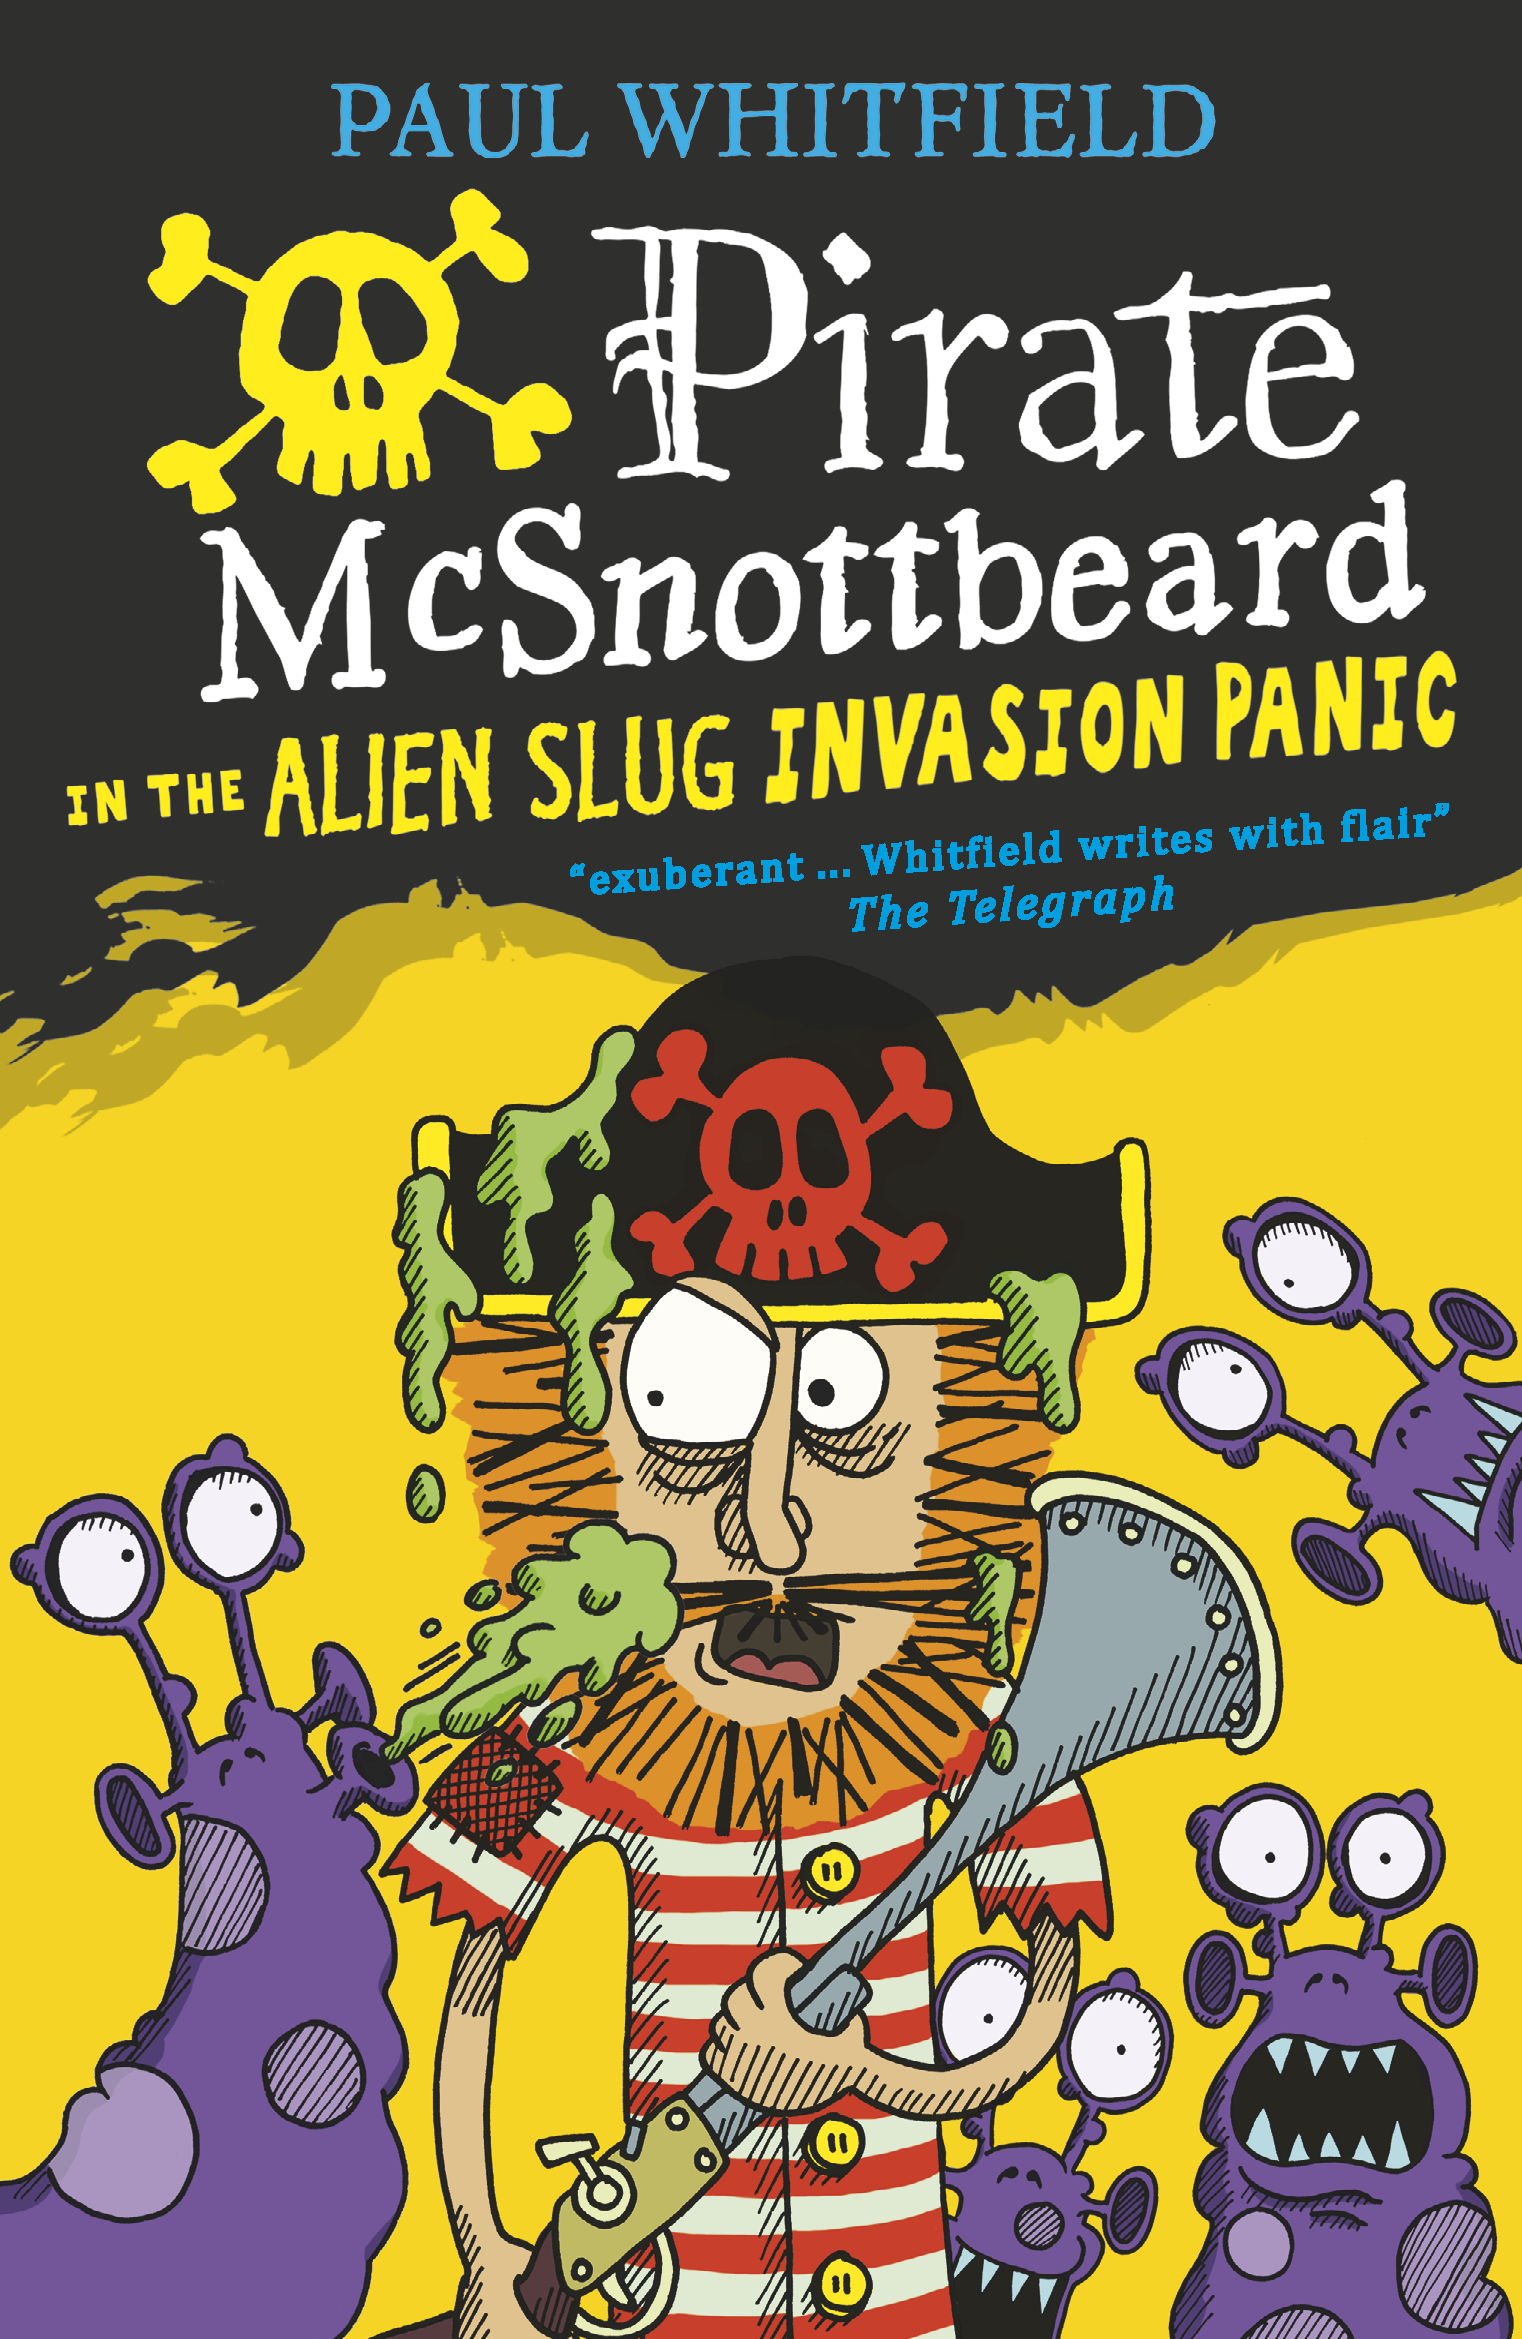 Pirate-McSnottbeard-in-the-Alien-Slug-Invasion-Panic